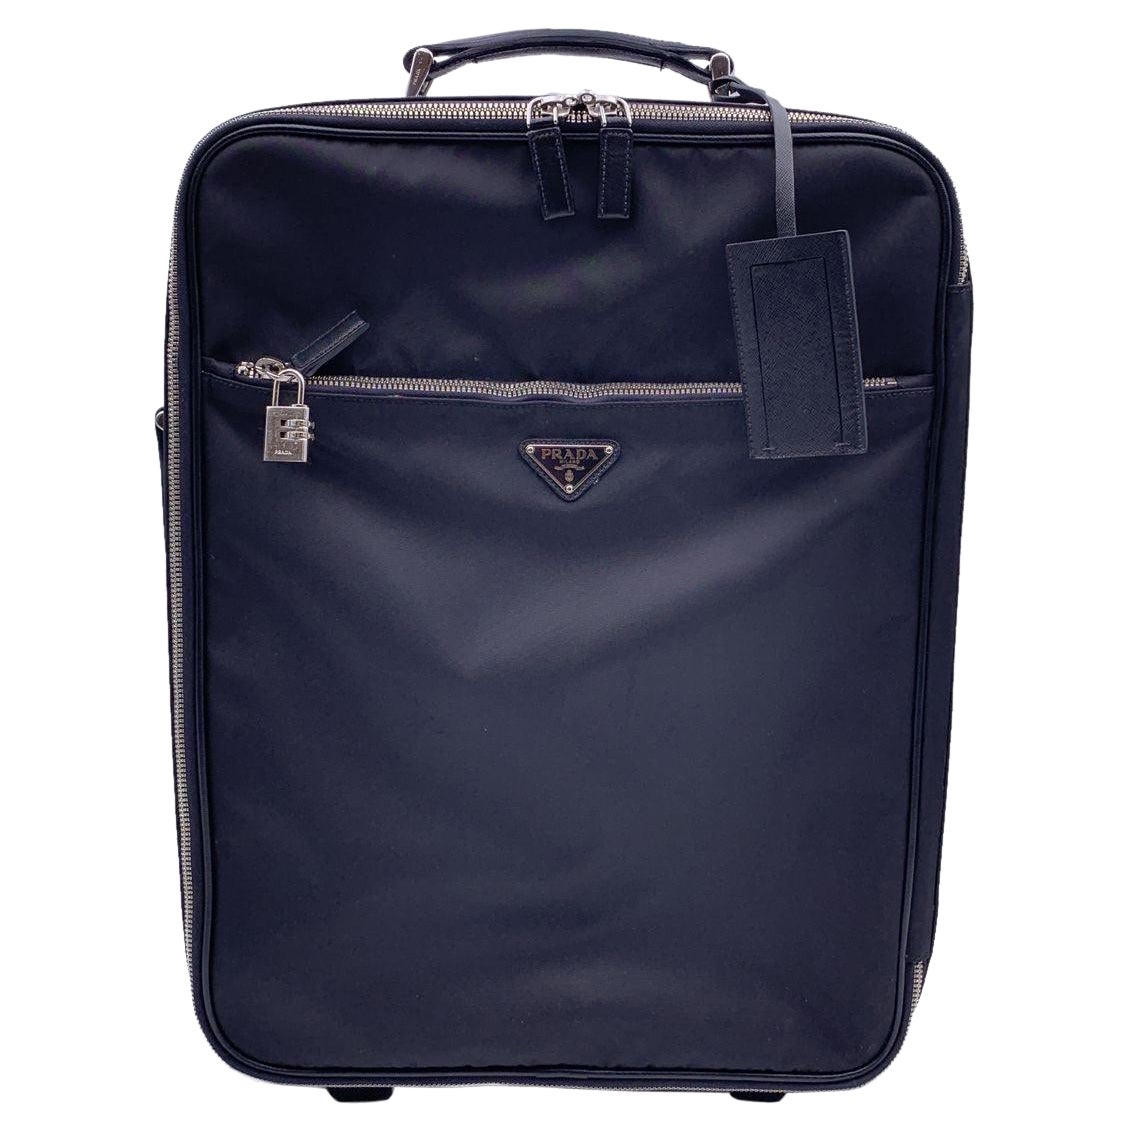 Prada Black Nylon Rolling Suitcase Trolley Luggage Travel Bag